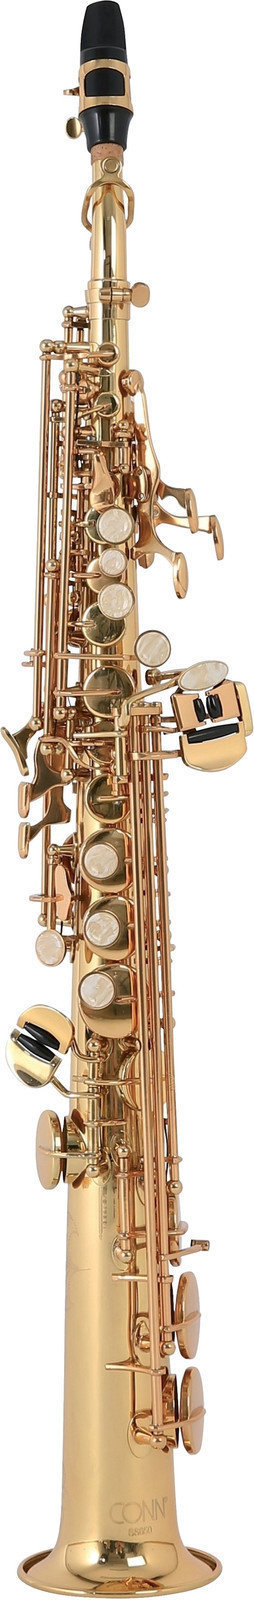 Soprano saxophone Conn SS650 Soprano saxophone